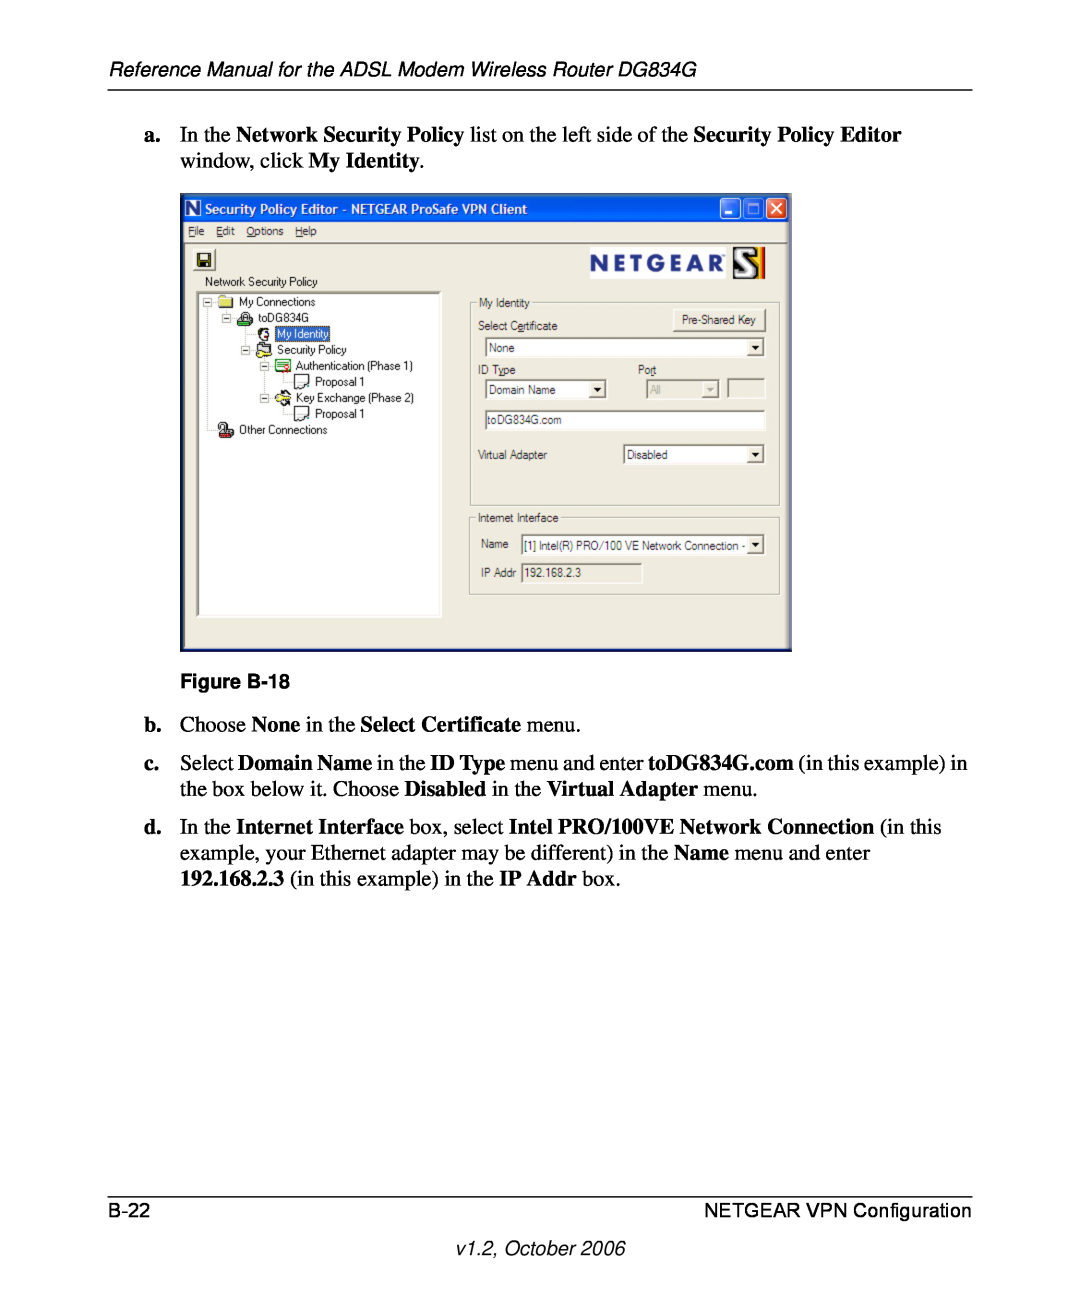 NETGEAR DG834G manual b. Choose None in the Select Certificate menu 